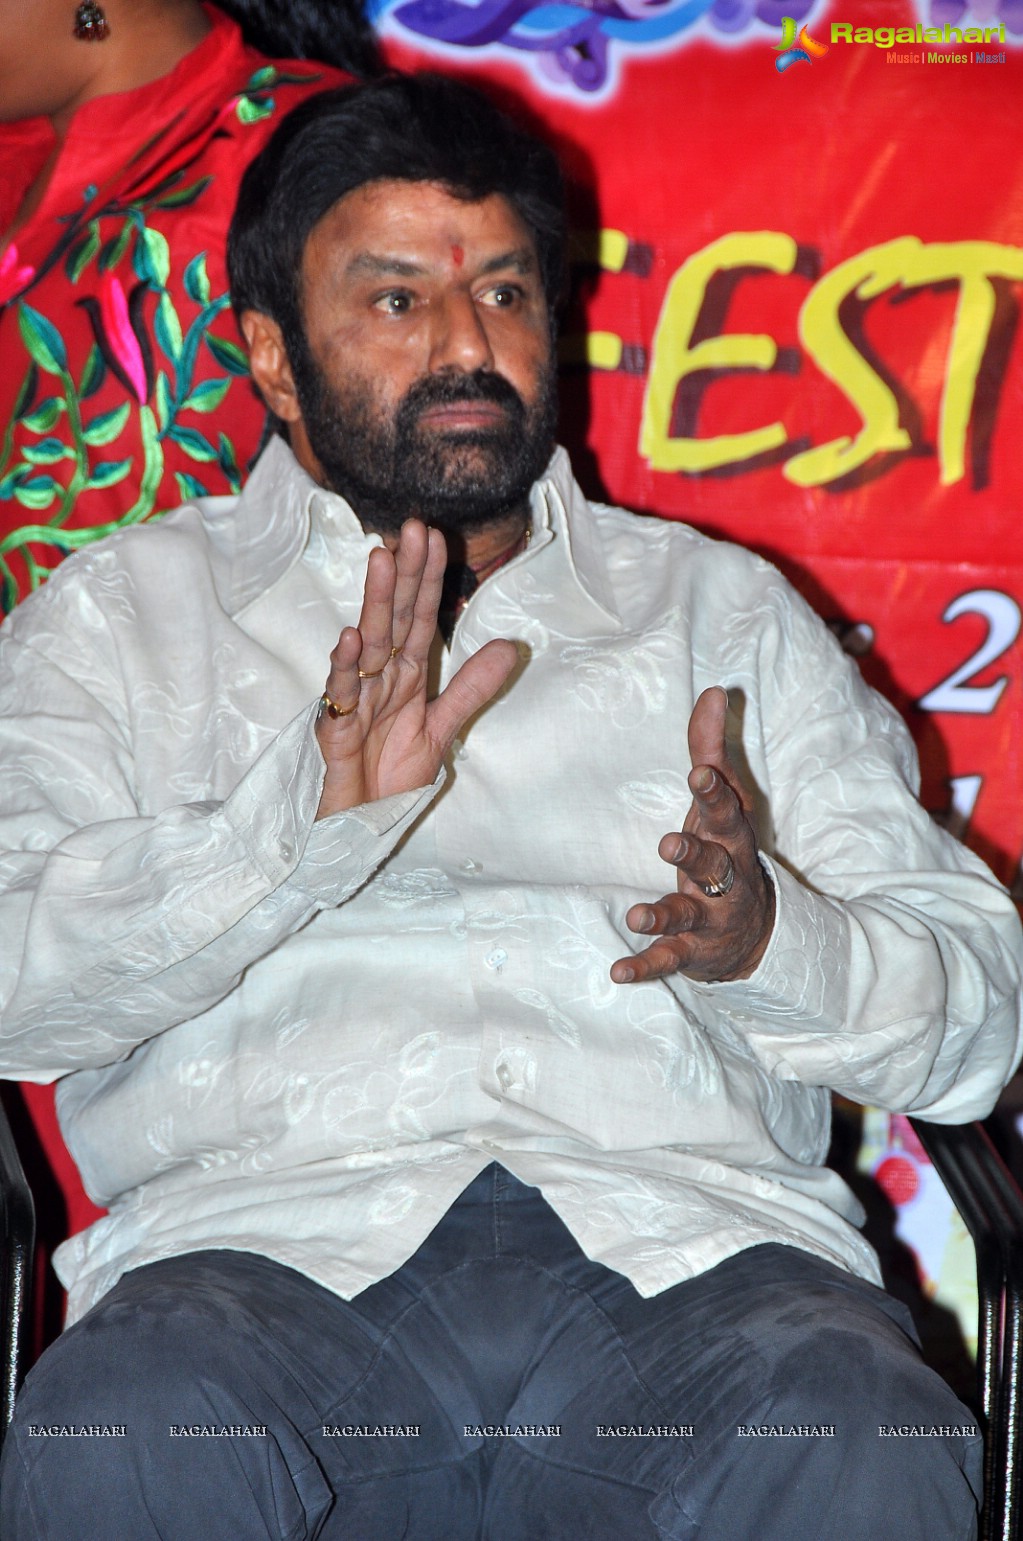 Nandamuri Balakrishna at Bapu Film Festival 2014